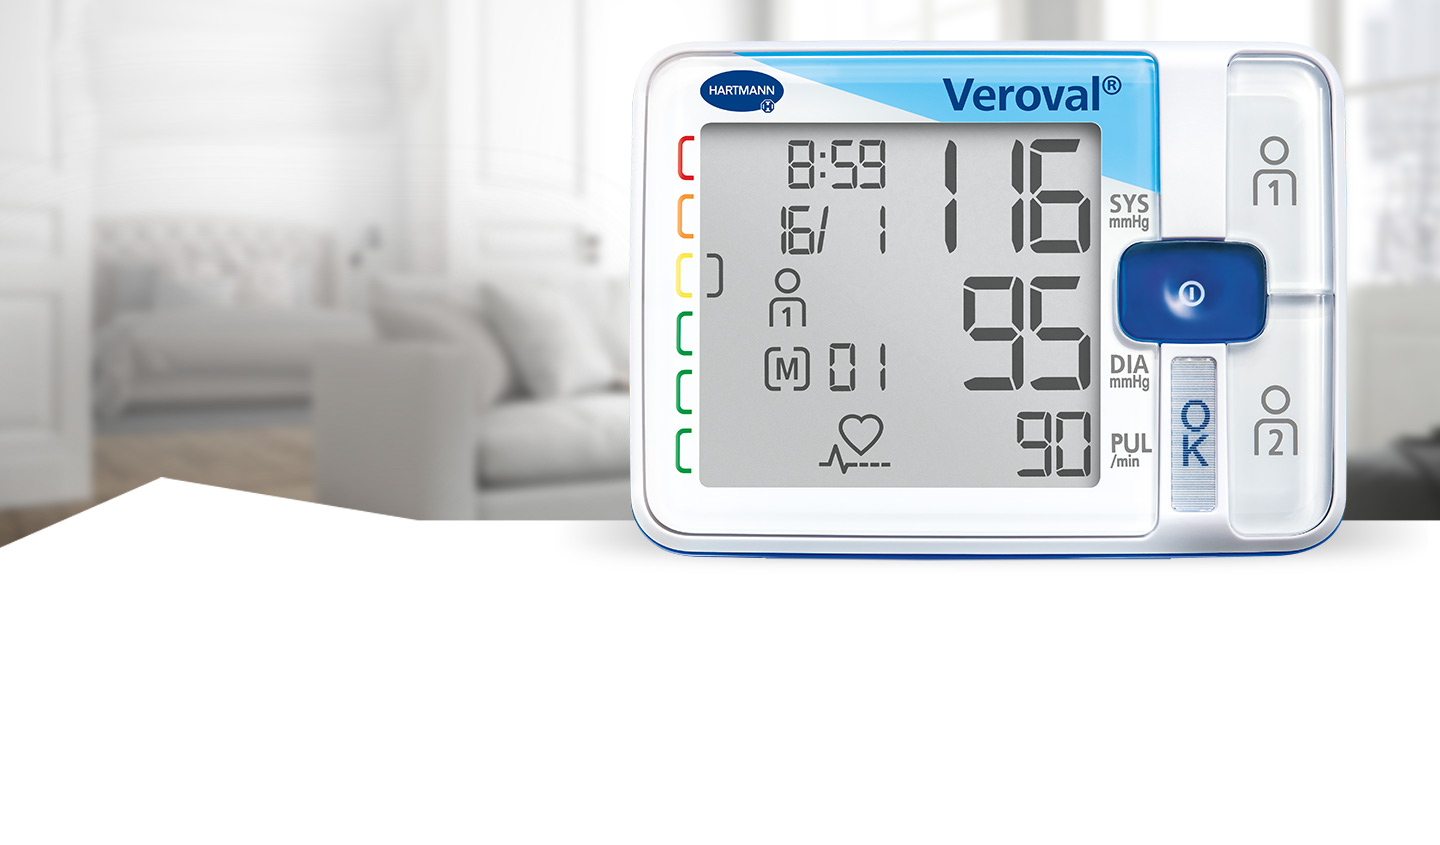 Bild des Veroval® Handgelenk-Blutdruckmessgeräts